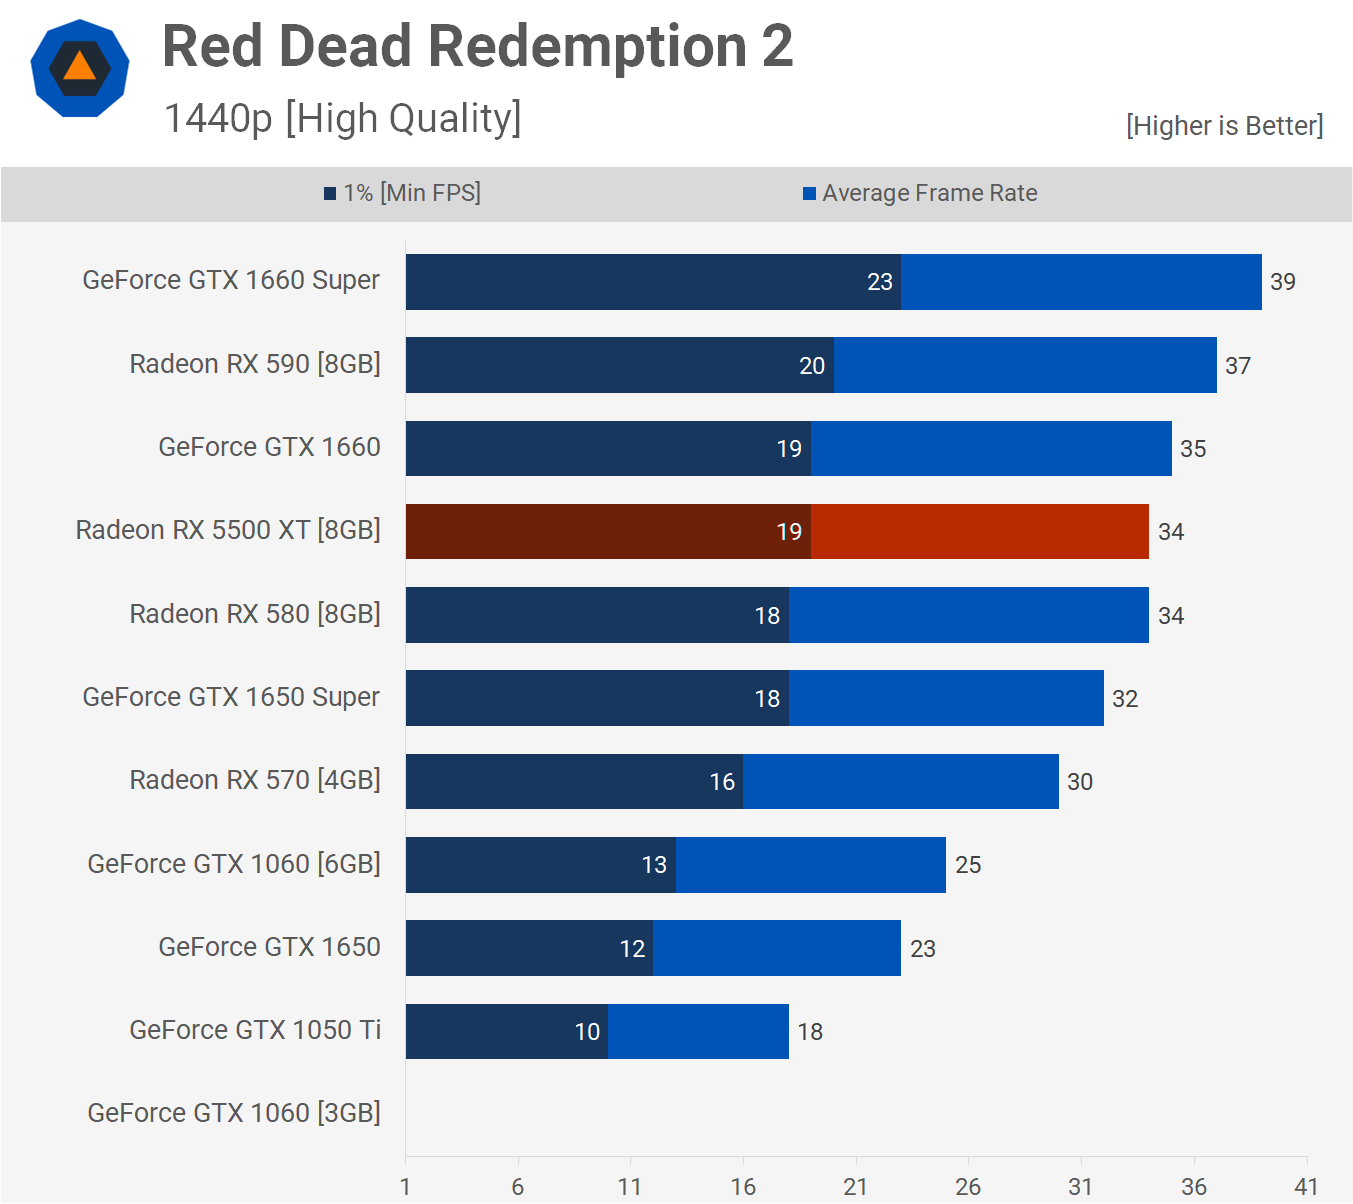 1649026262 398 Revision de AMD Radeon RX 5500 XT 8GB